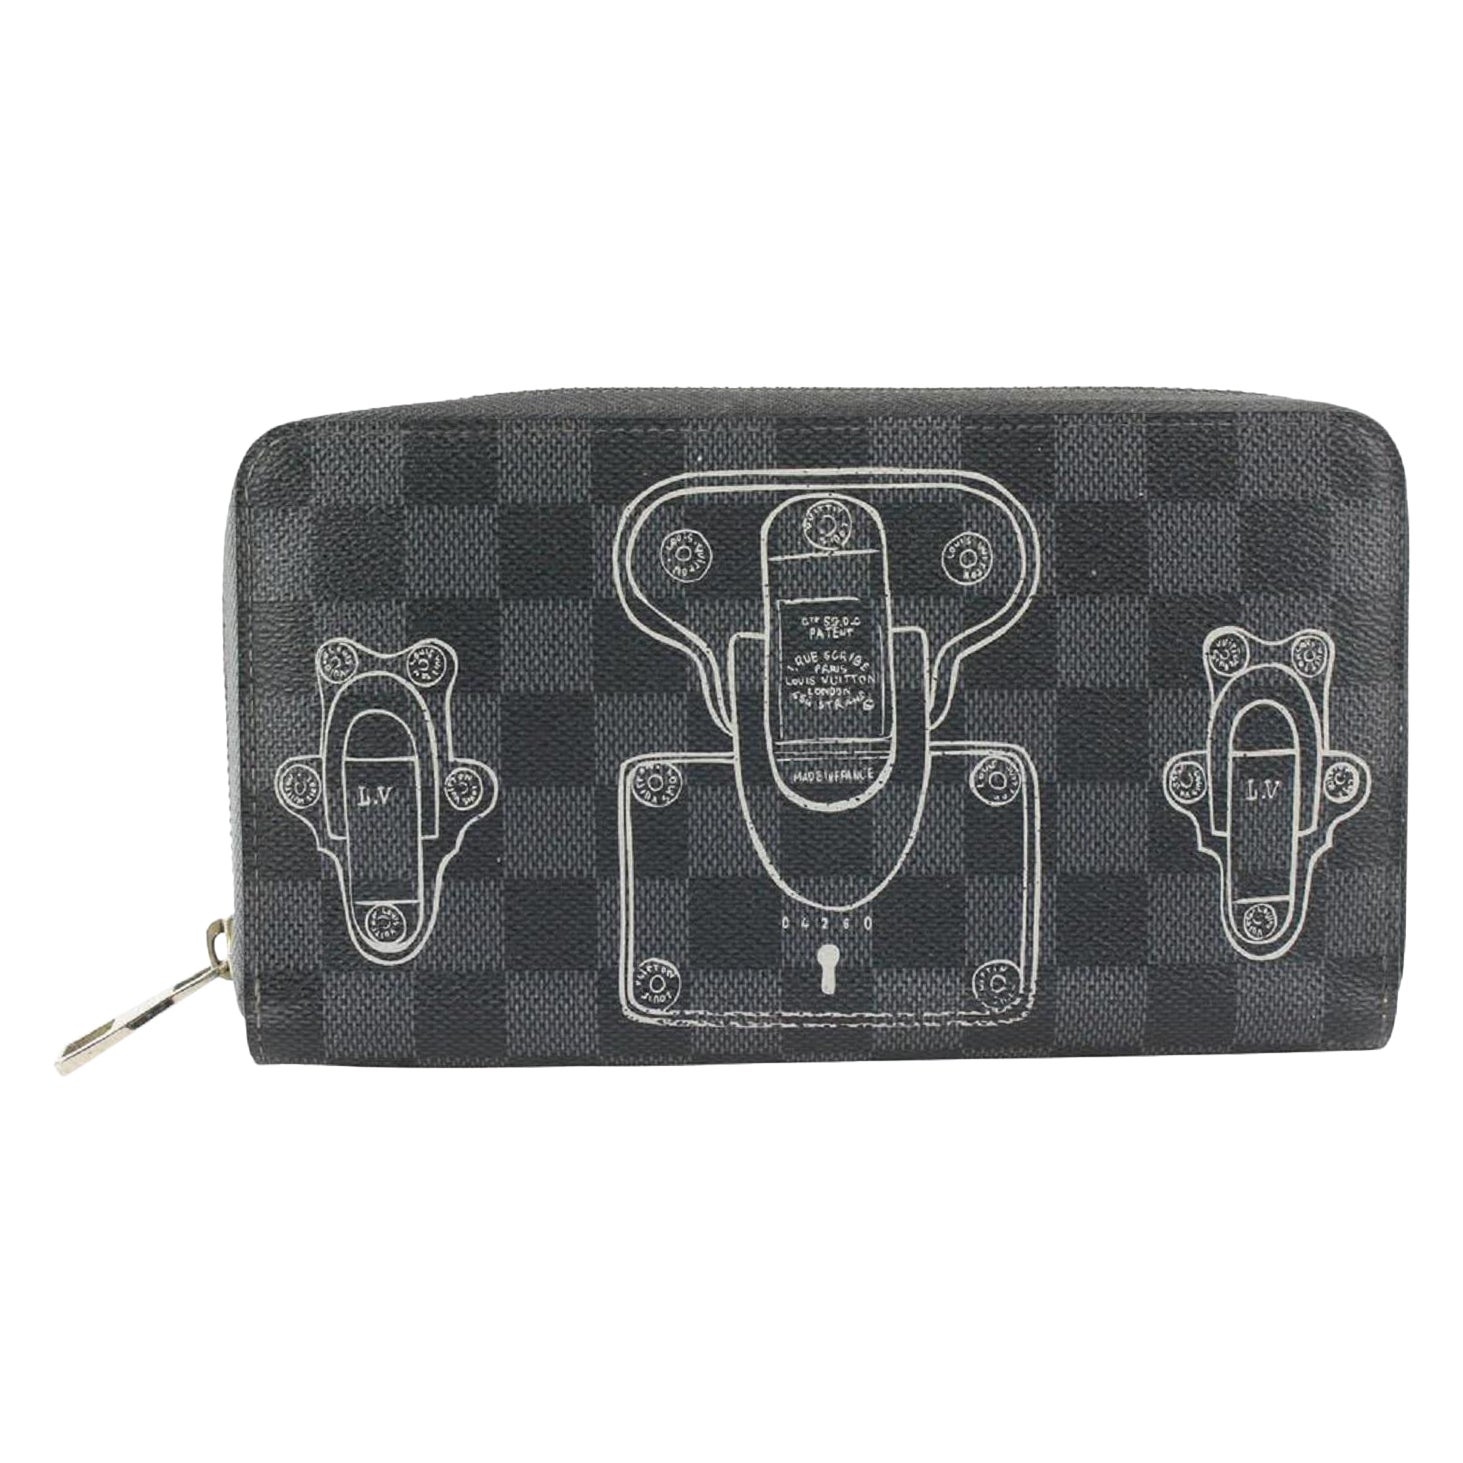 Louis Vuitton Damier Graphite Large Card Holder Wallet Case Insert 25lk413s